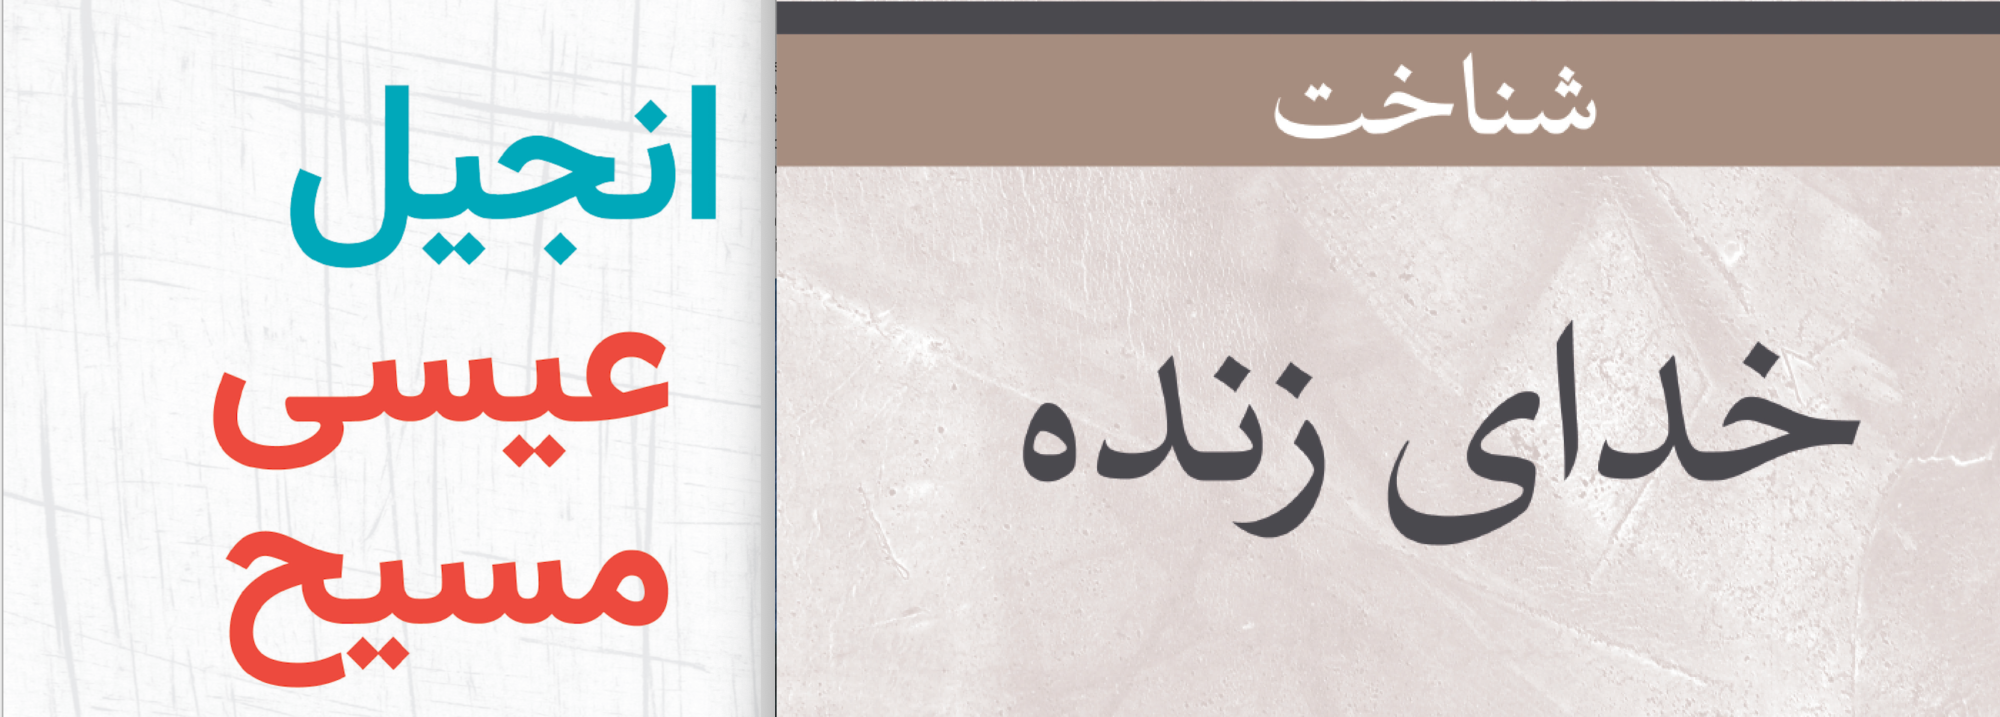 Farsi Covers Feature